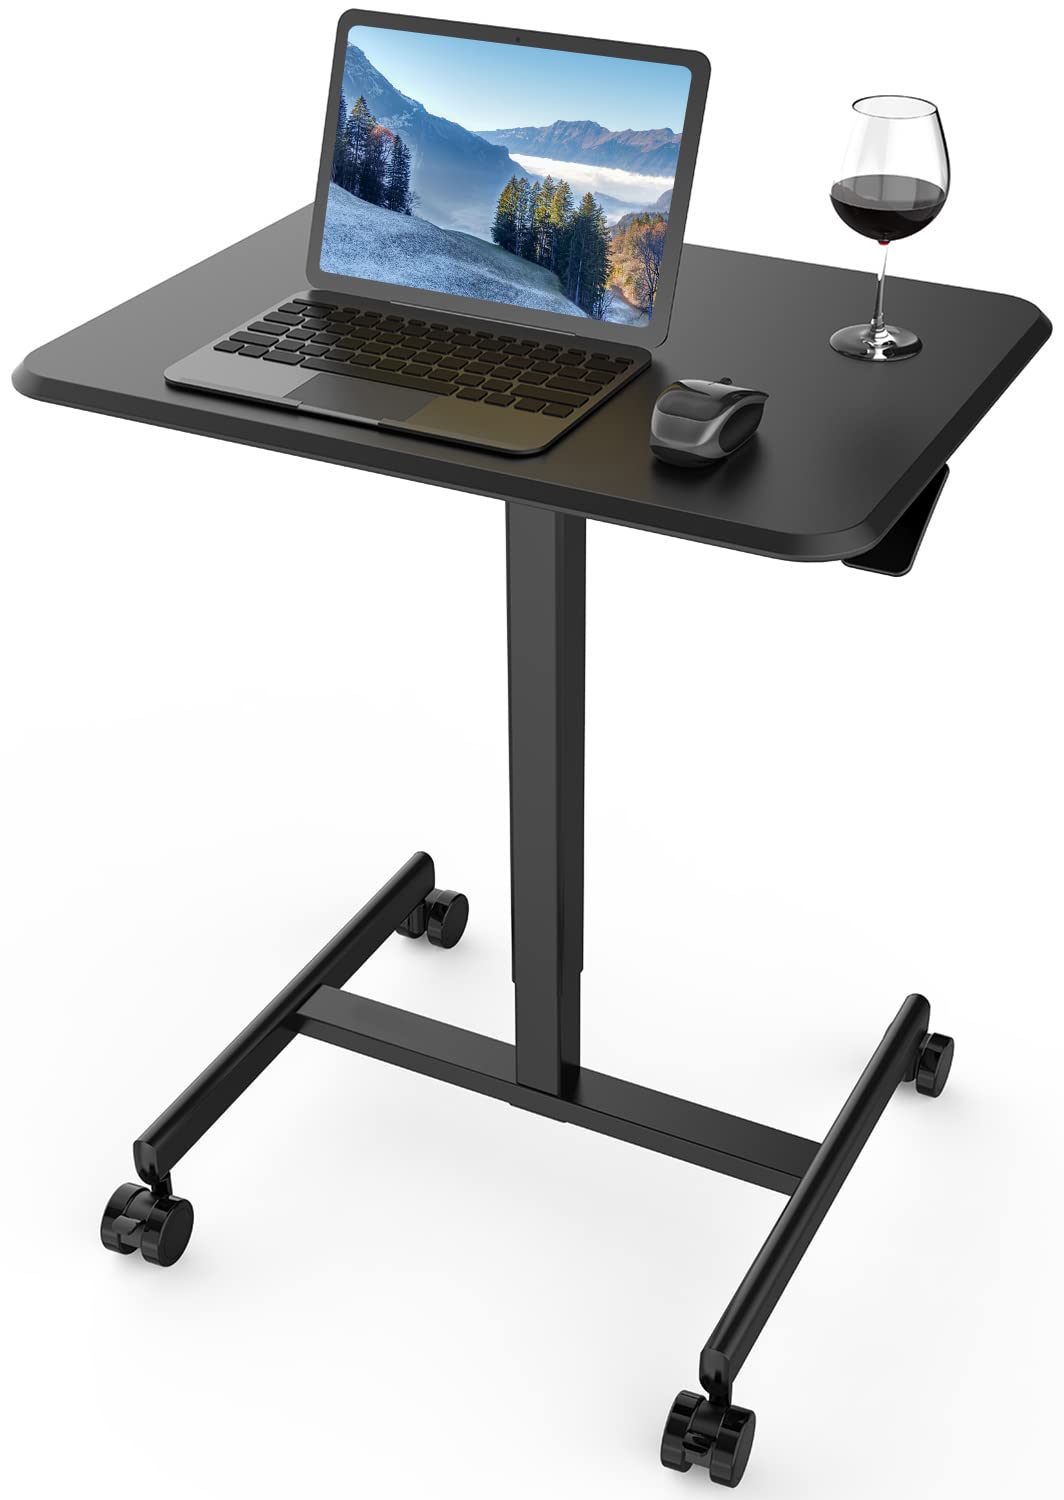 Mobile Laptop Desk Sit-Stand Desk Adjustable Height Laptop Desk Cart Ergonomic Table Small Standing Desk with Pneumatic Height Adjustments (Obsidian)